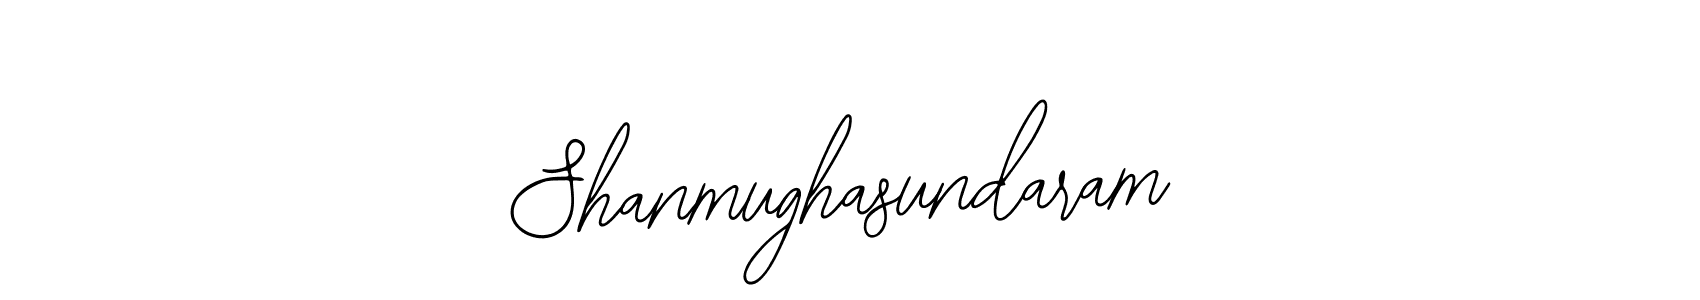 Make a beautiful signature design for name Shanmughasundaram. Use this online signature maker to create a handwritten signature for free. Shanmughasundaram signature style 12 images and pictures png